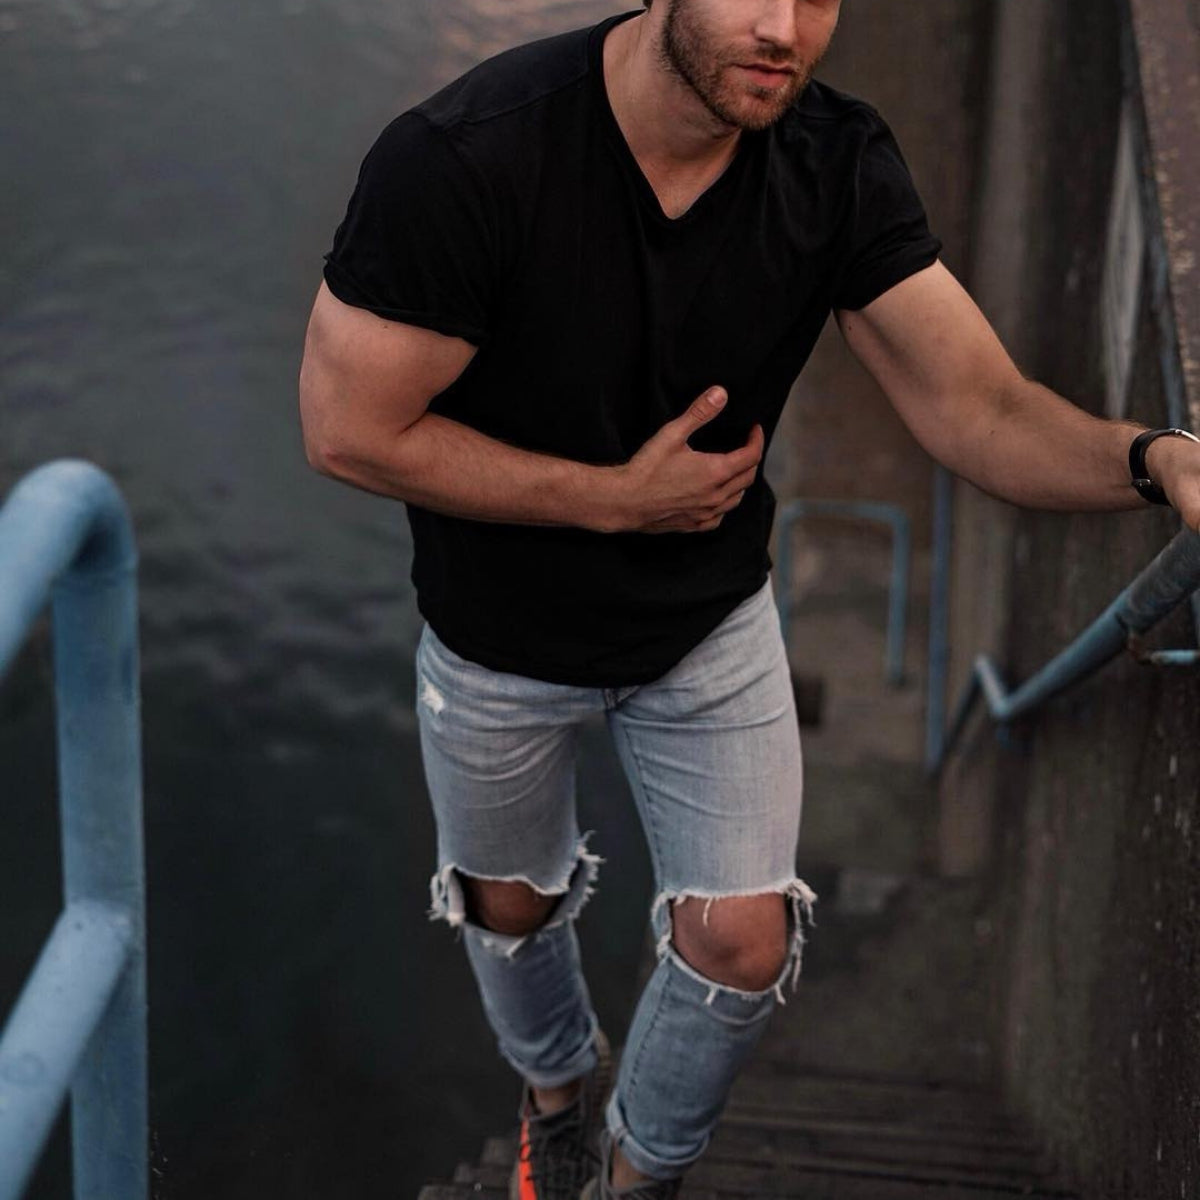 mens jean styles 2019